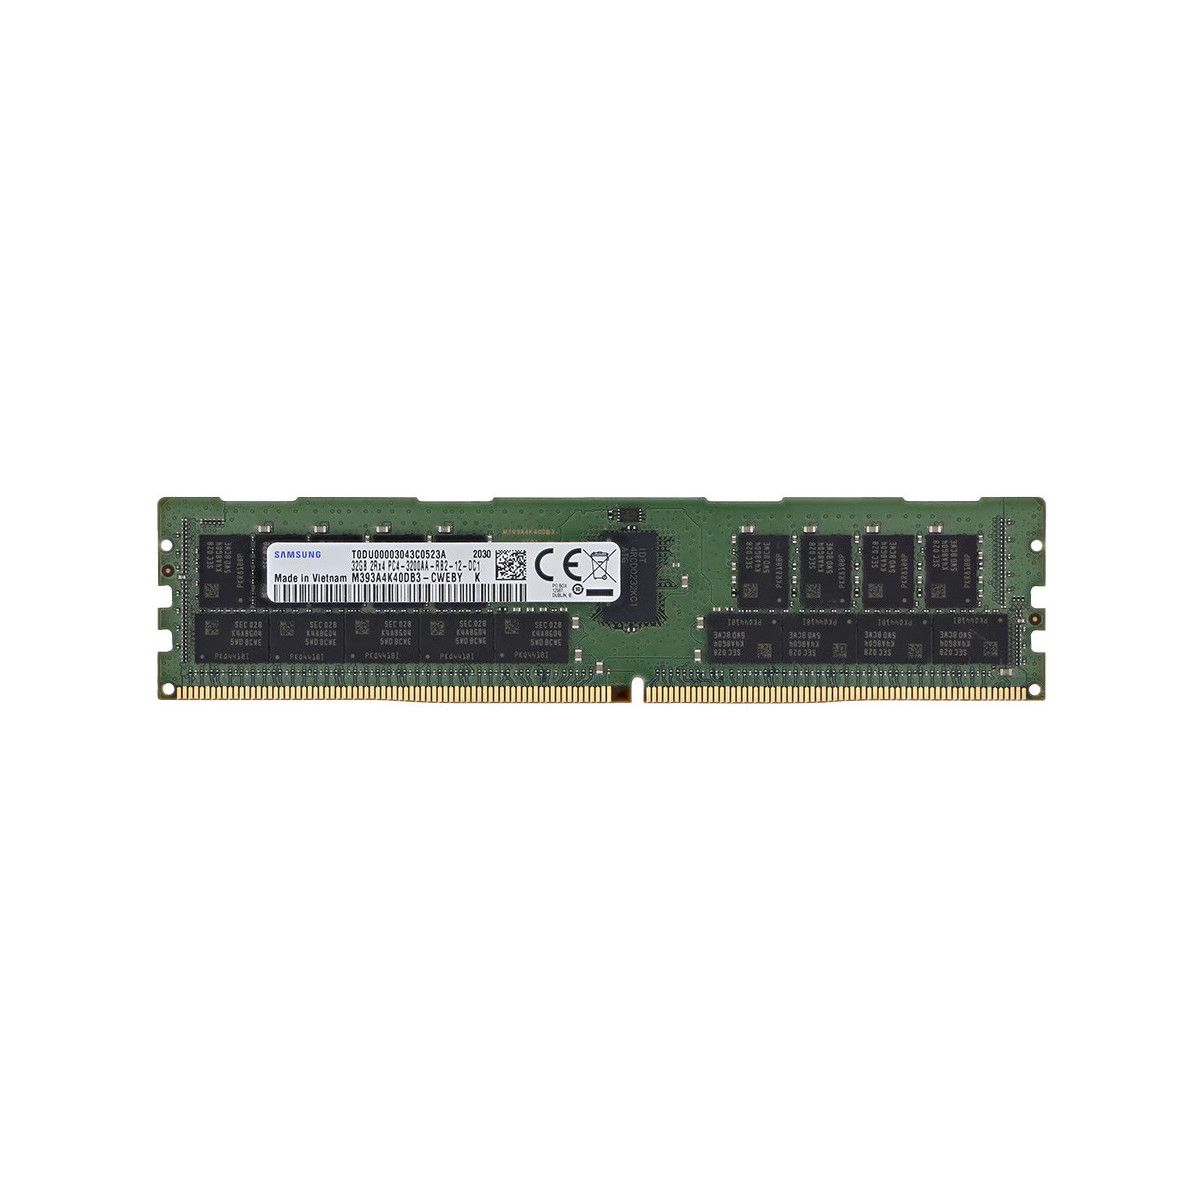 AA810827-MS - Memstar 1x 32GB DDR4-3200 RDIMM PC4-25600R - Mem-Star OEM compatibile Memoria 1 - Memstar 